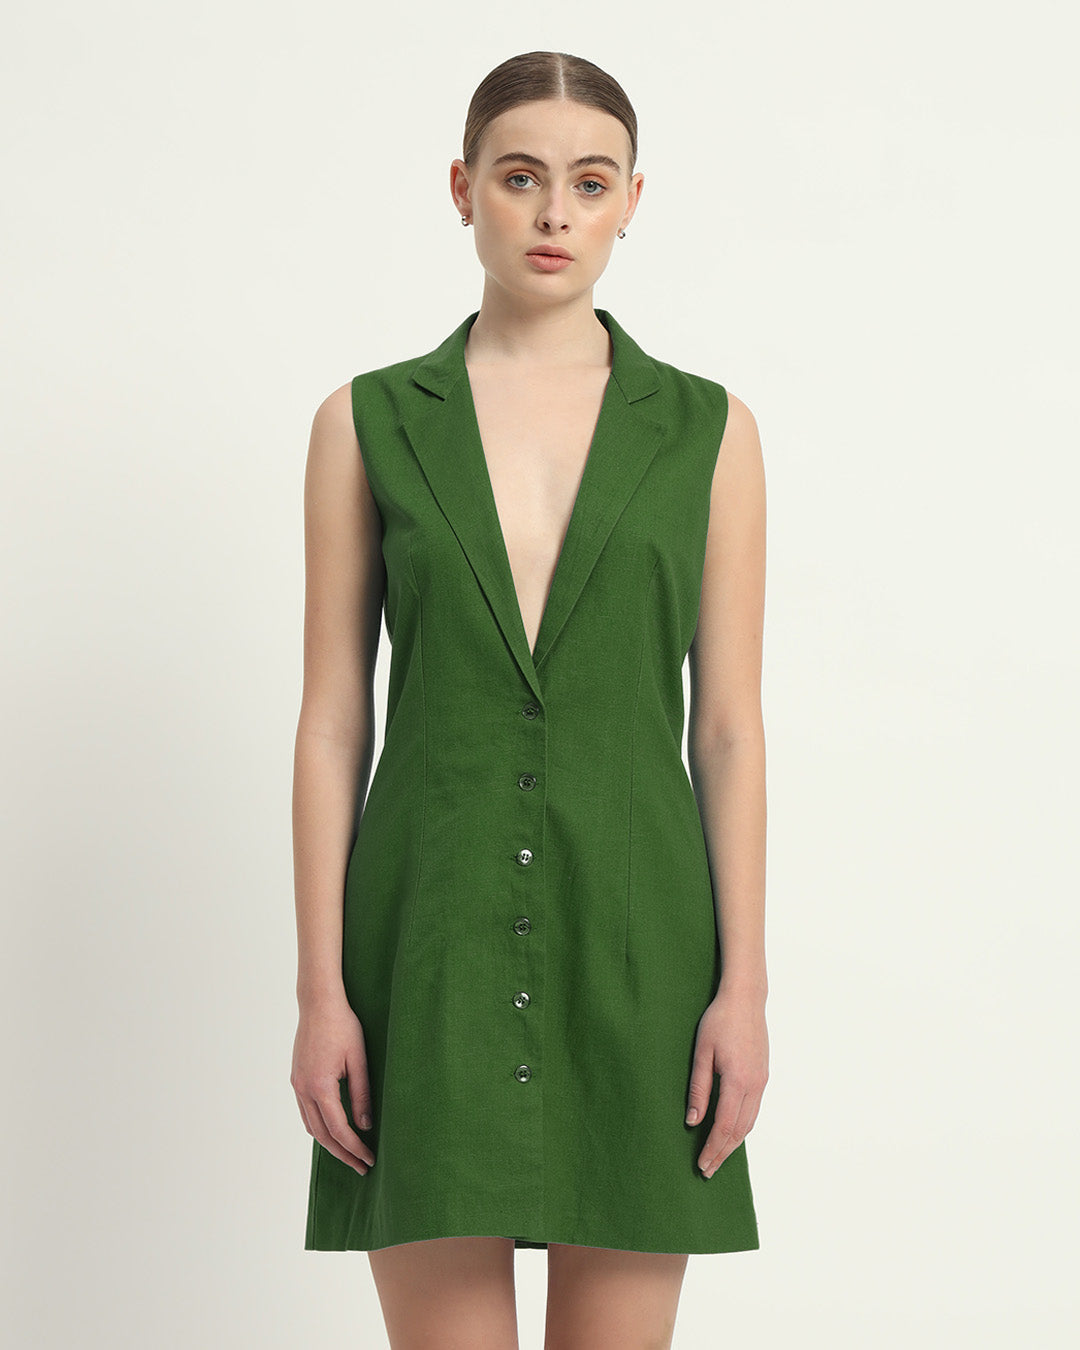 The Vernon Emerald Cotton Dress